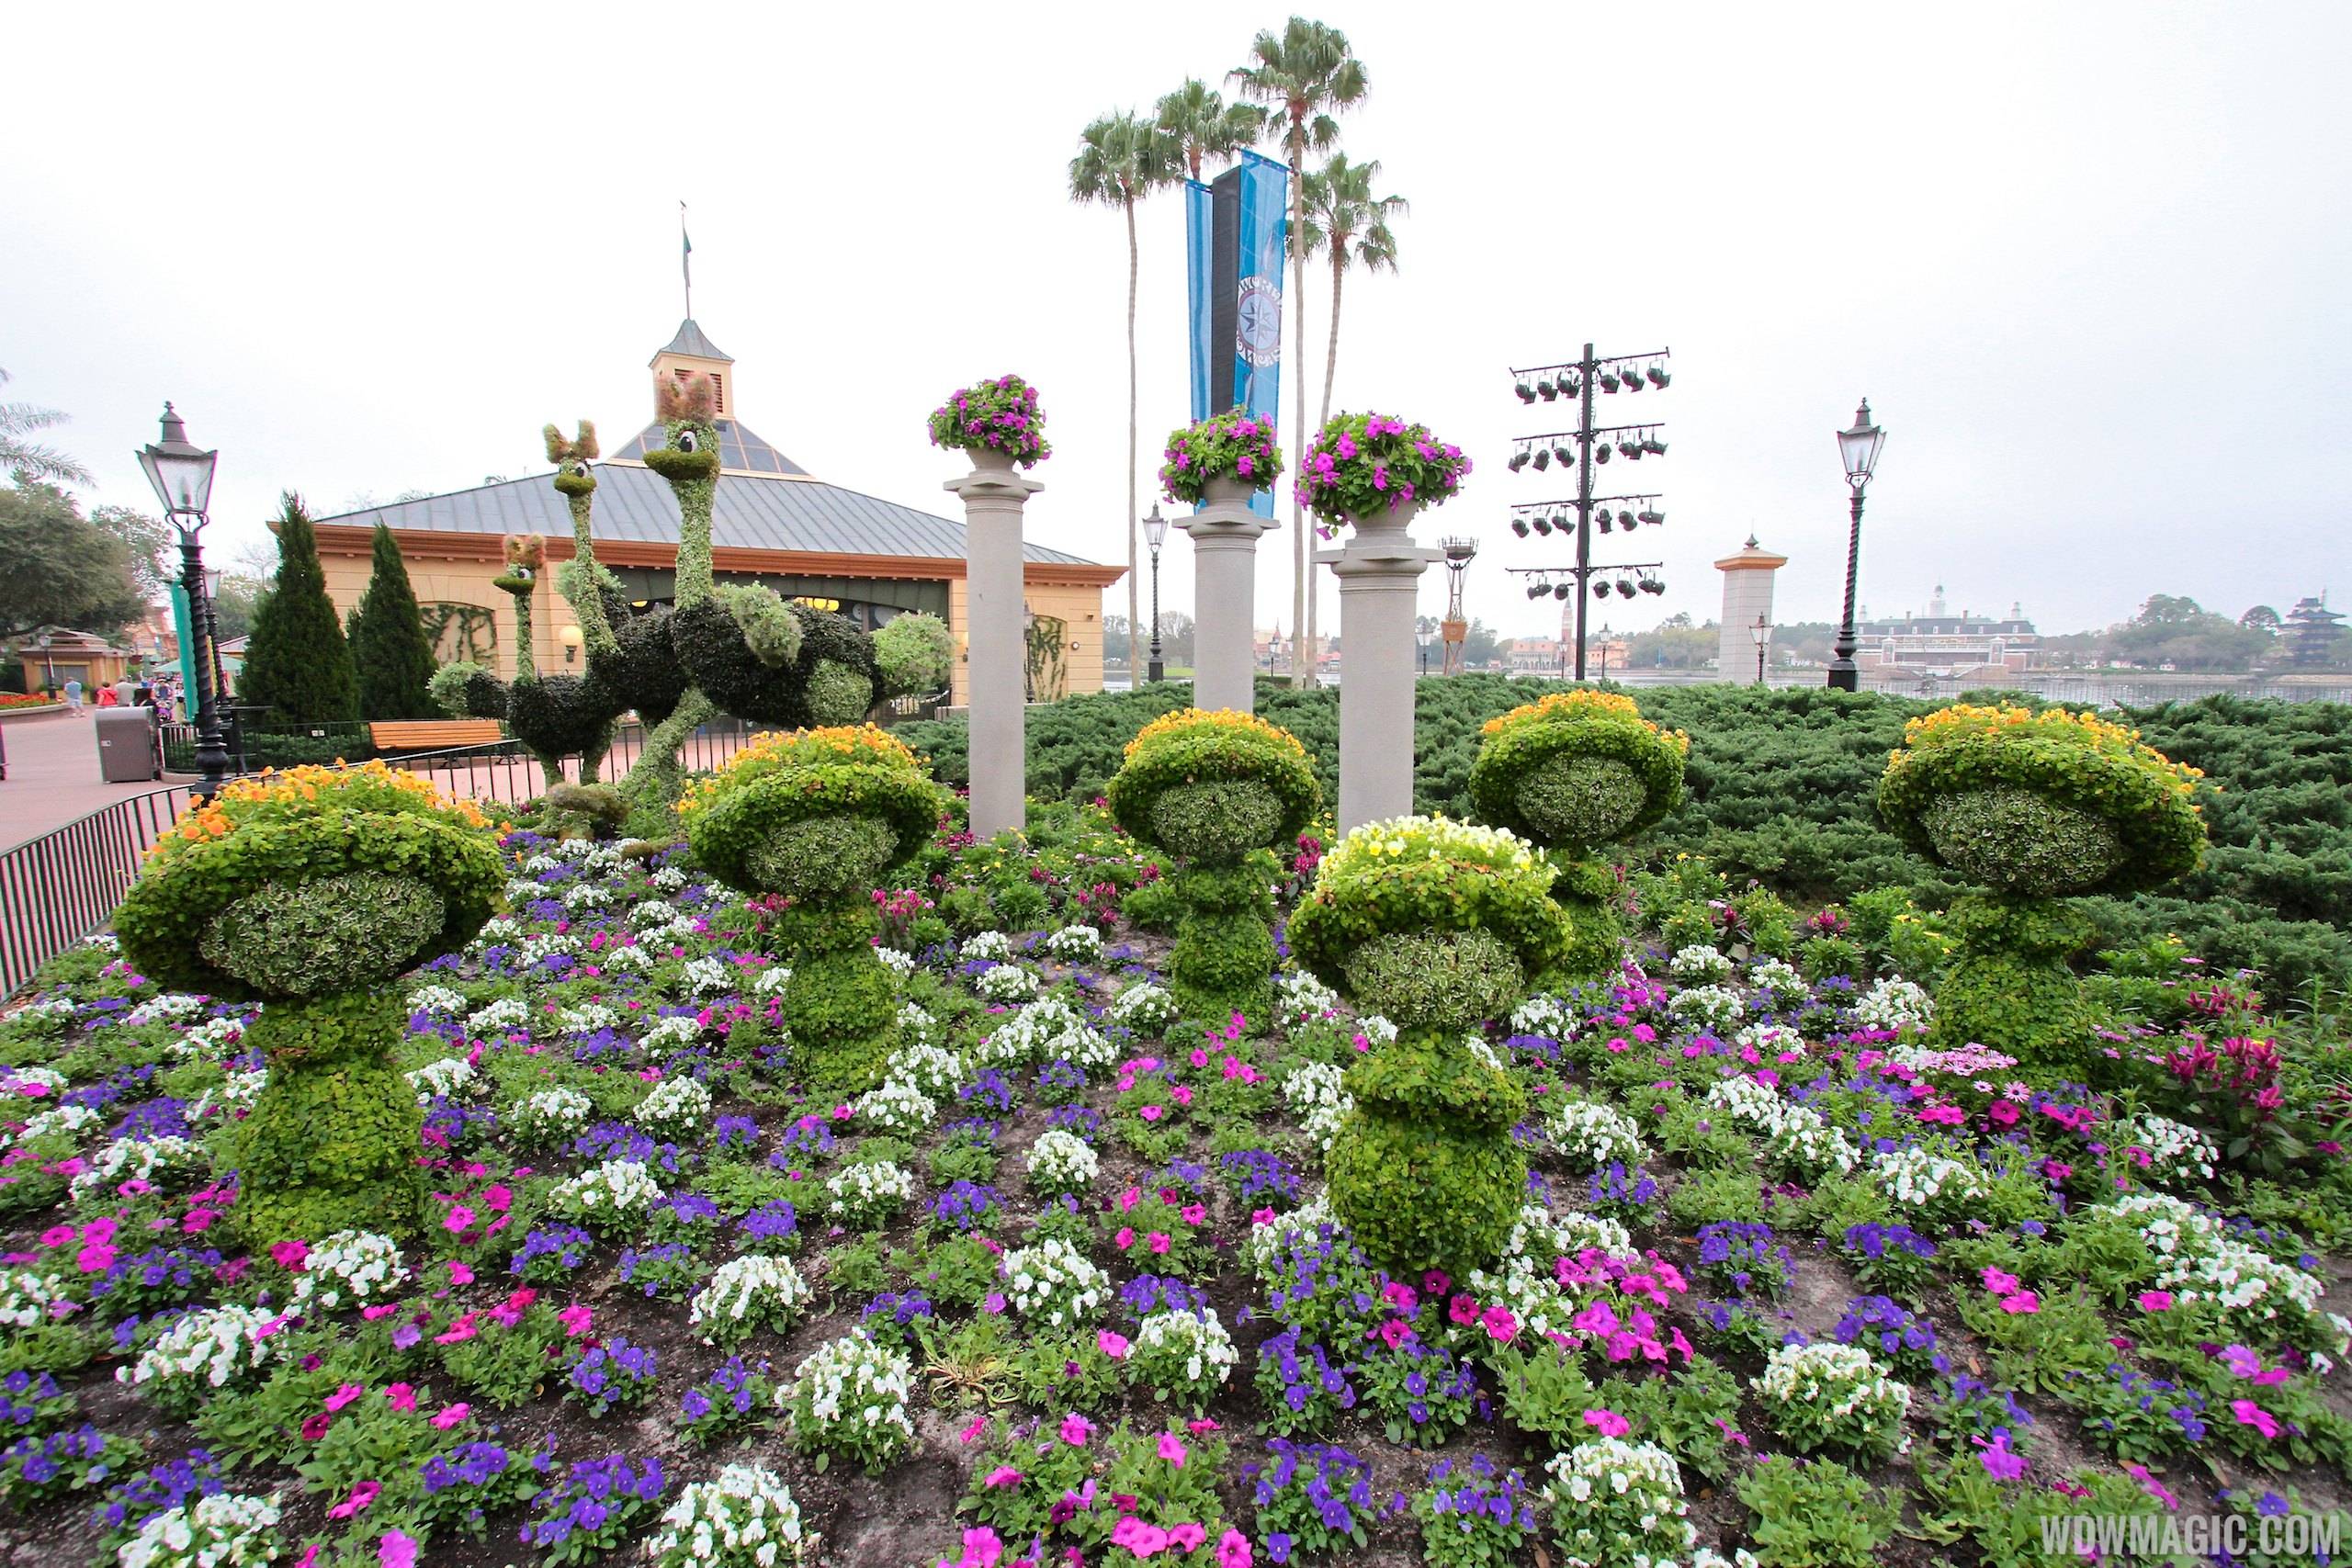 2014 Epcot Flower and Garden Festival - Fantasia topiary